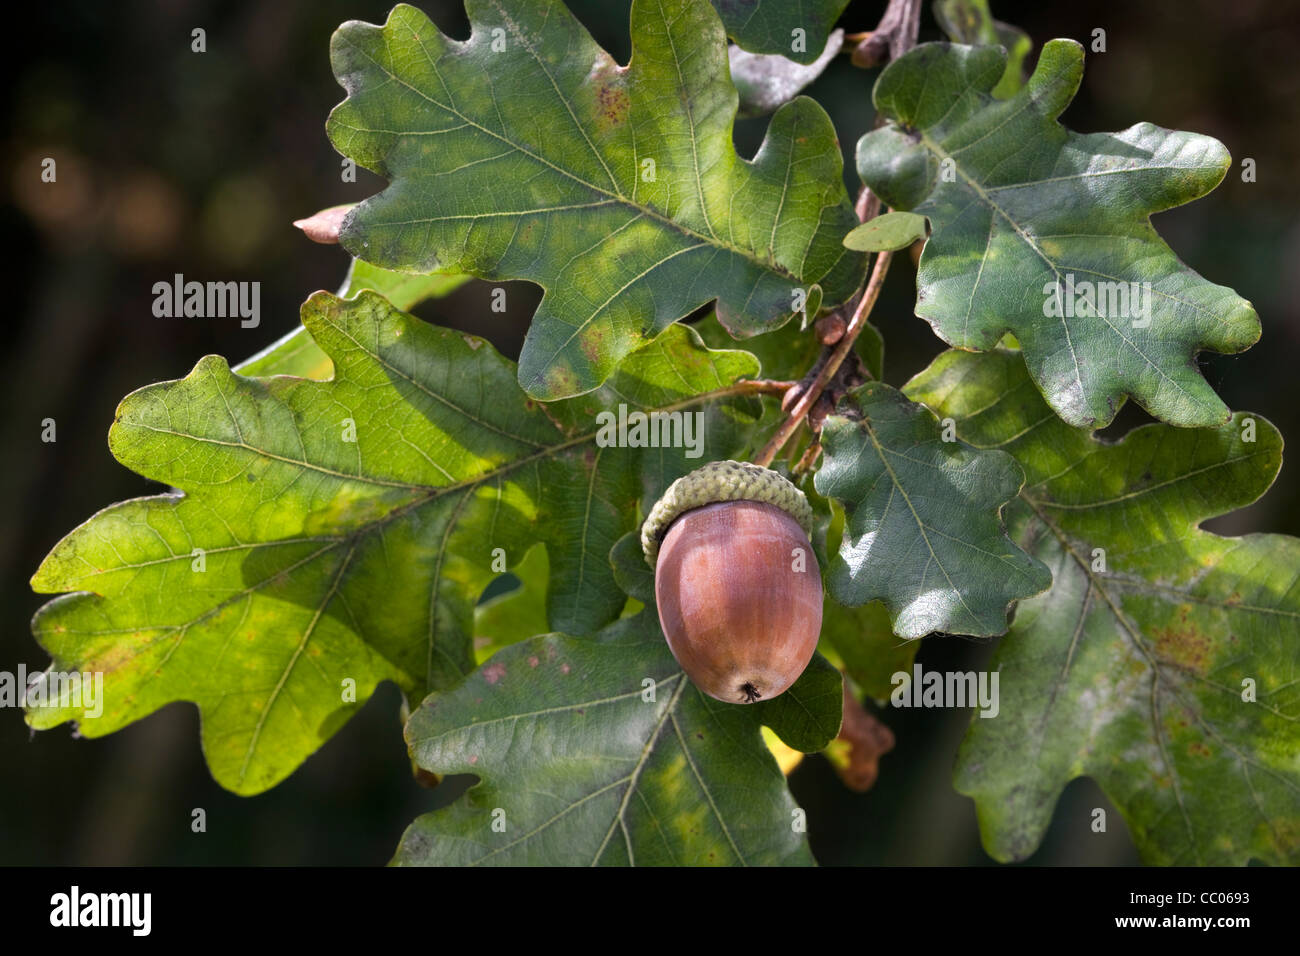 Acorns and leaves of English oak / pedunculate oak tree (Quercus robur), Belgium Stock Photo